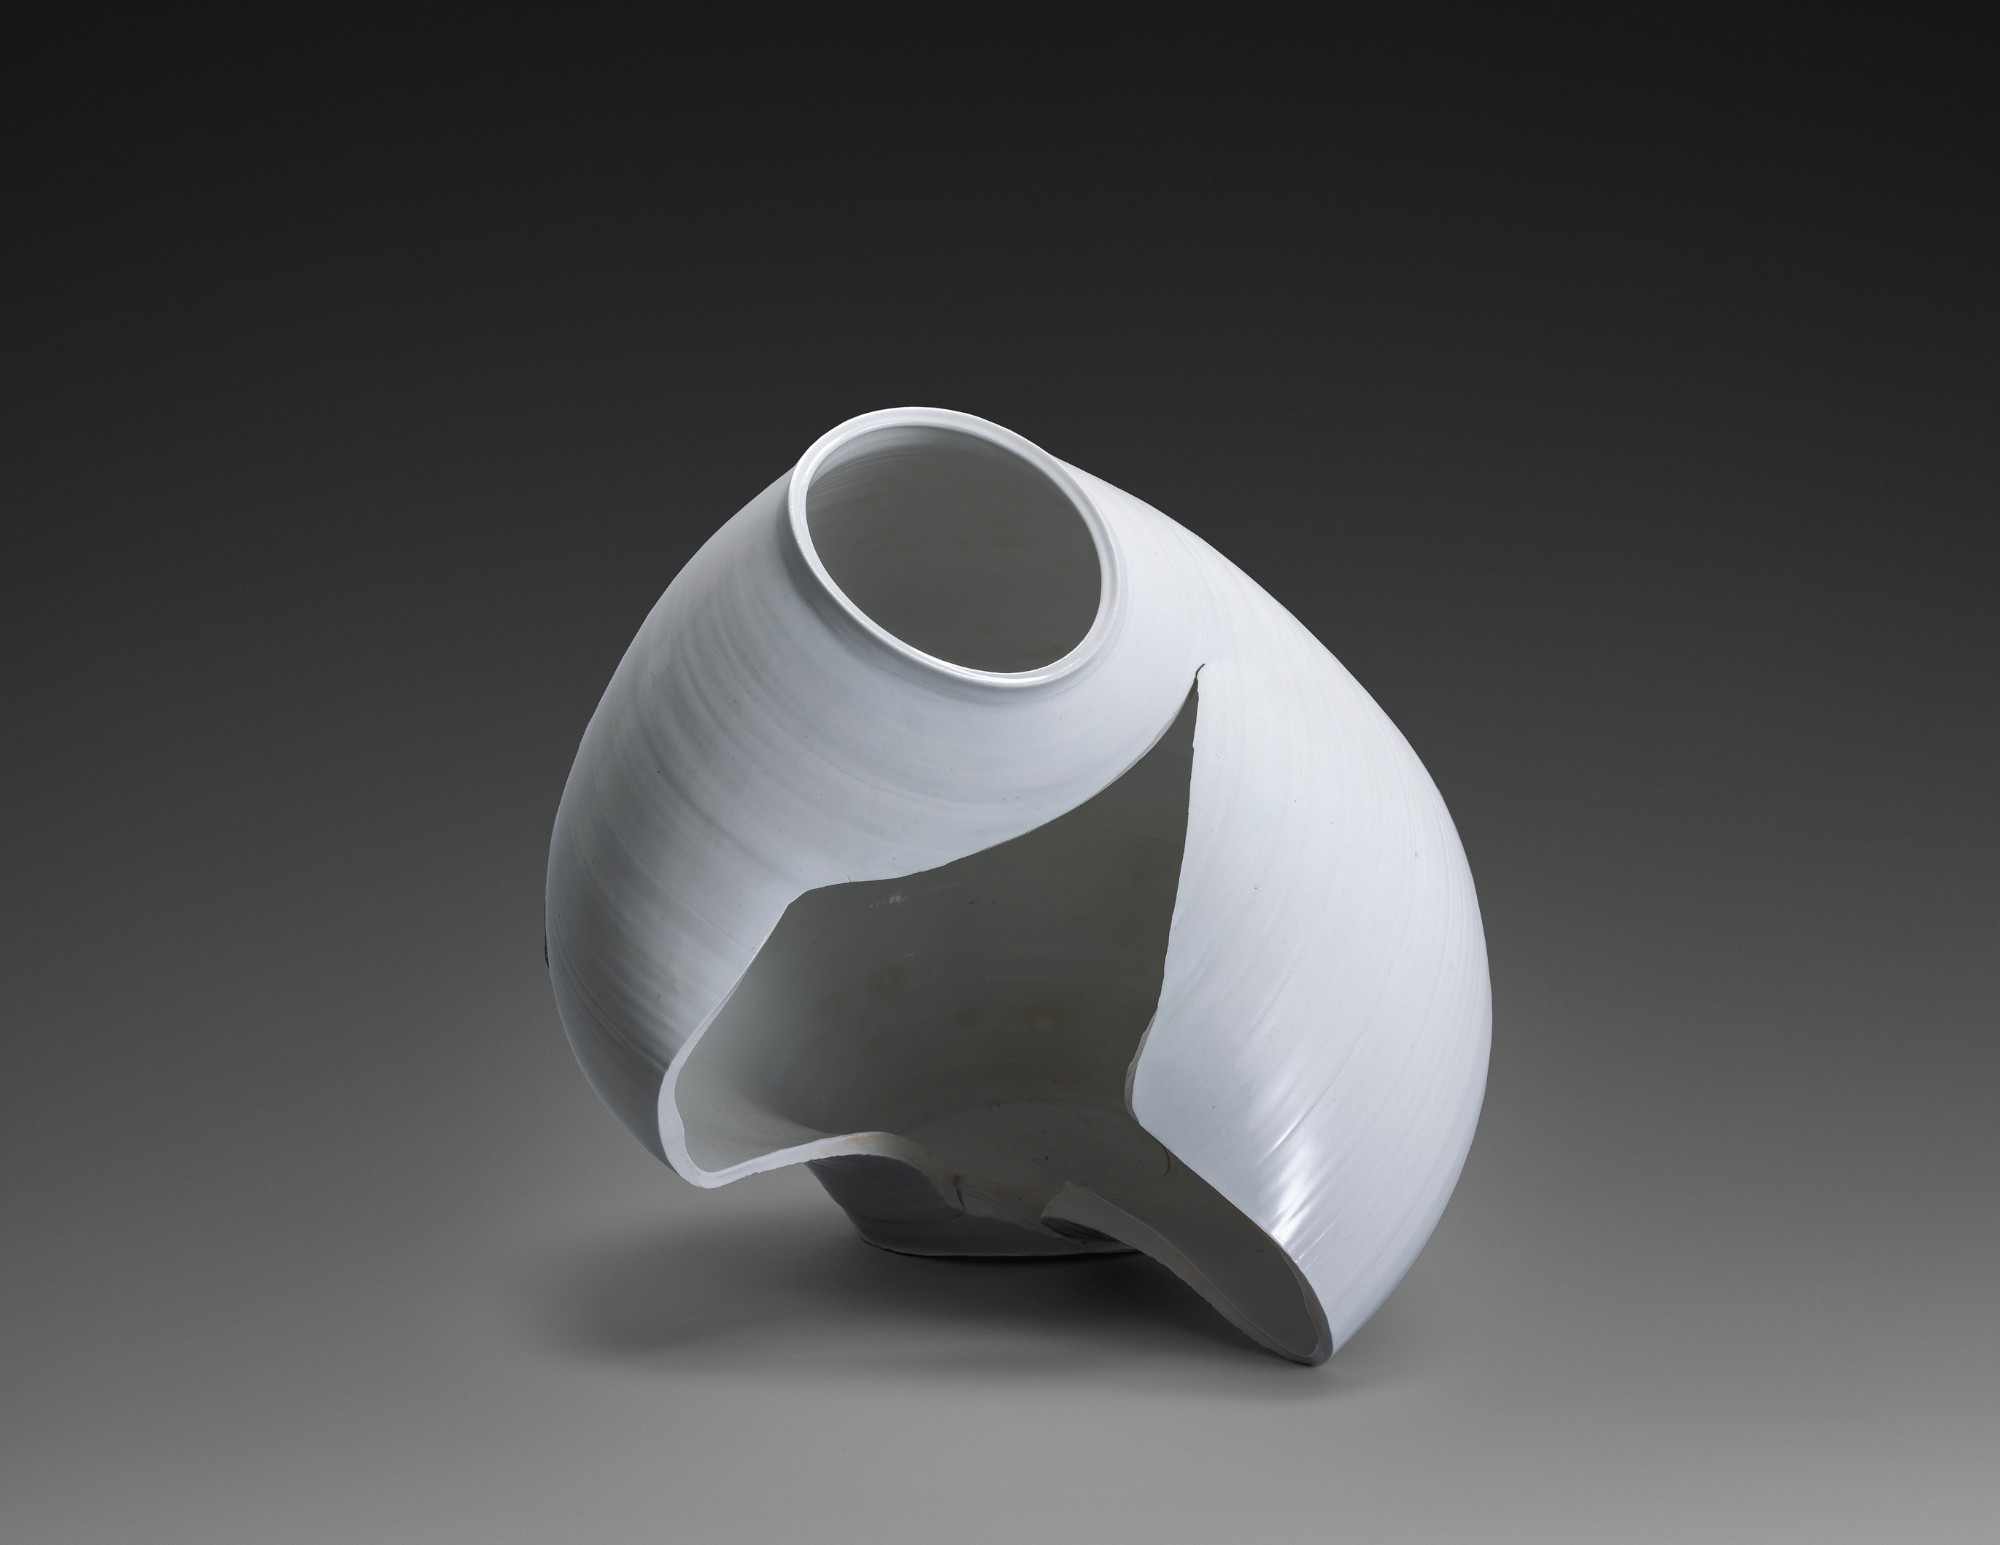 Transcendent Clay / Kondo: A Century of Japanese Ceramic Art